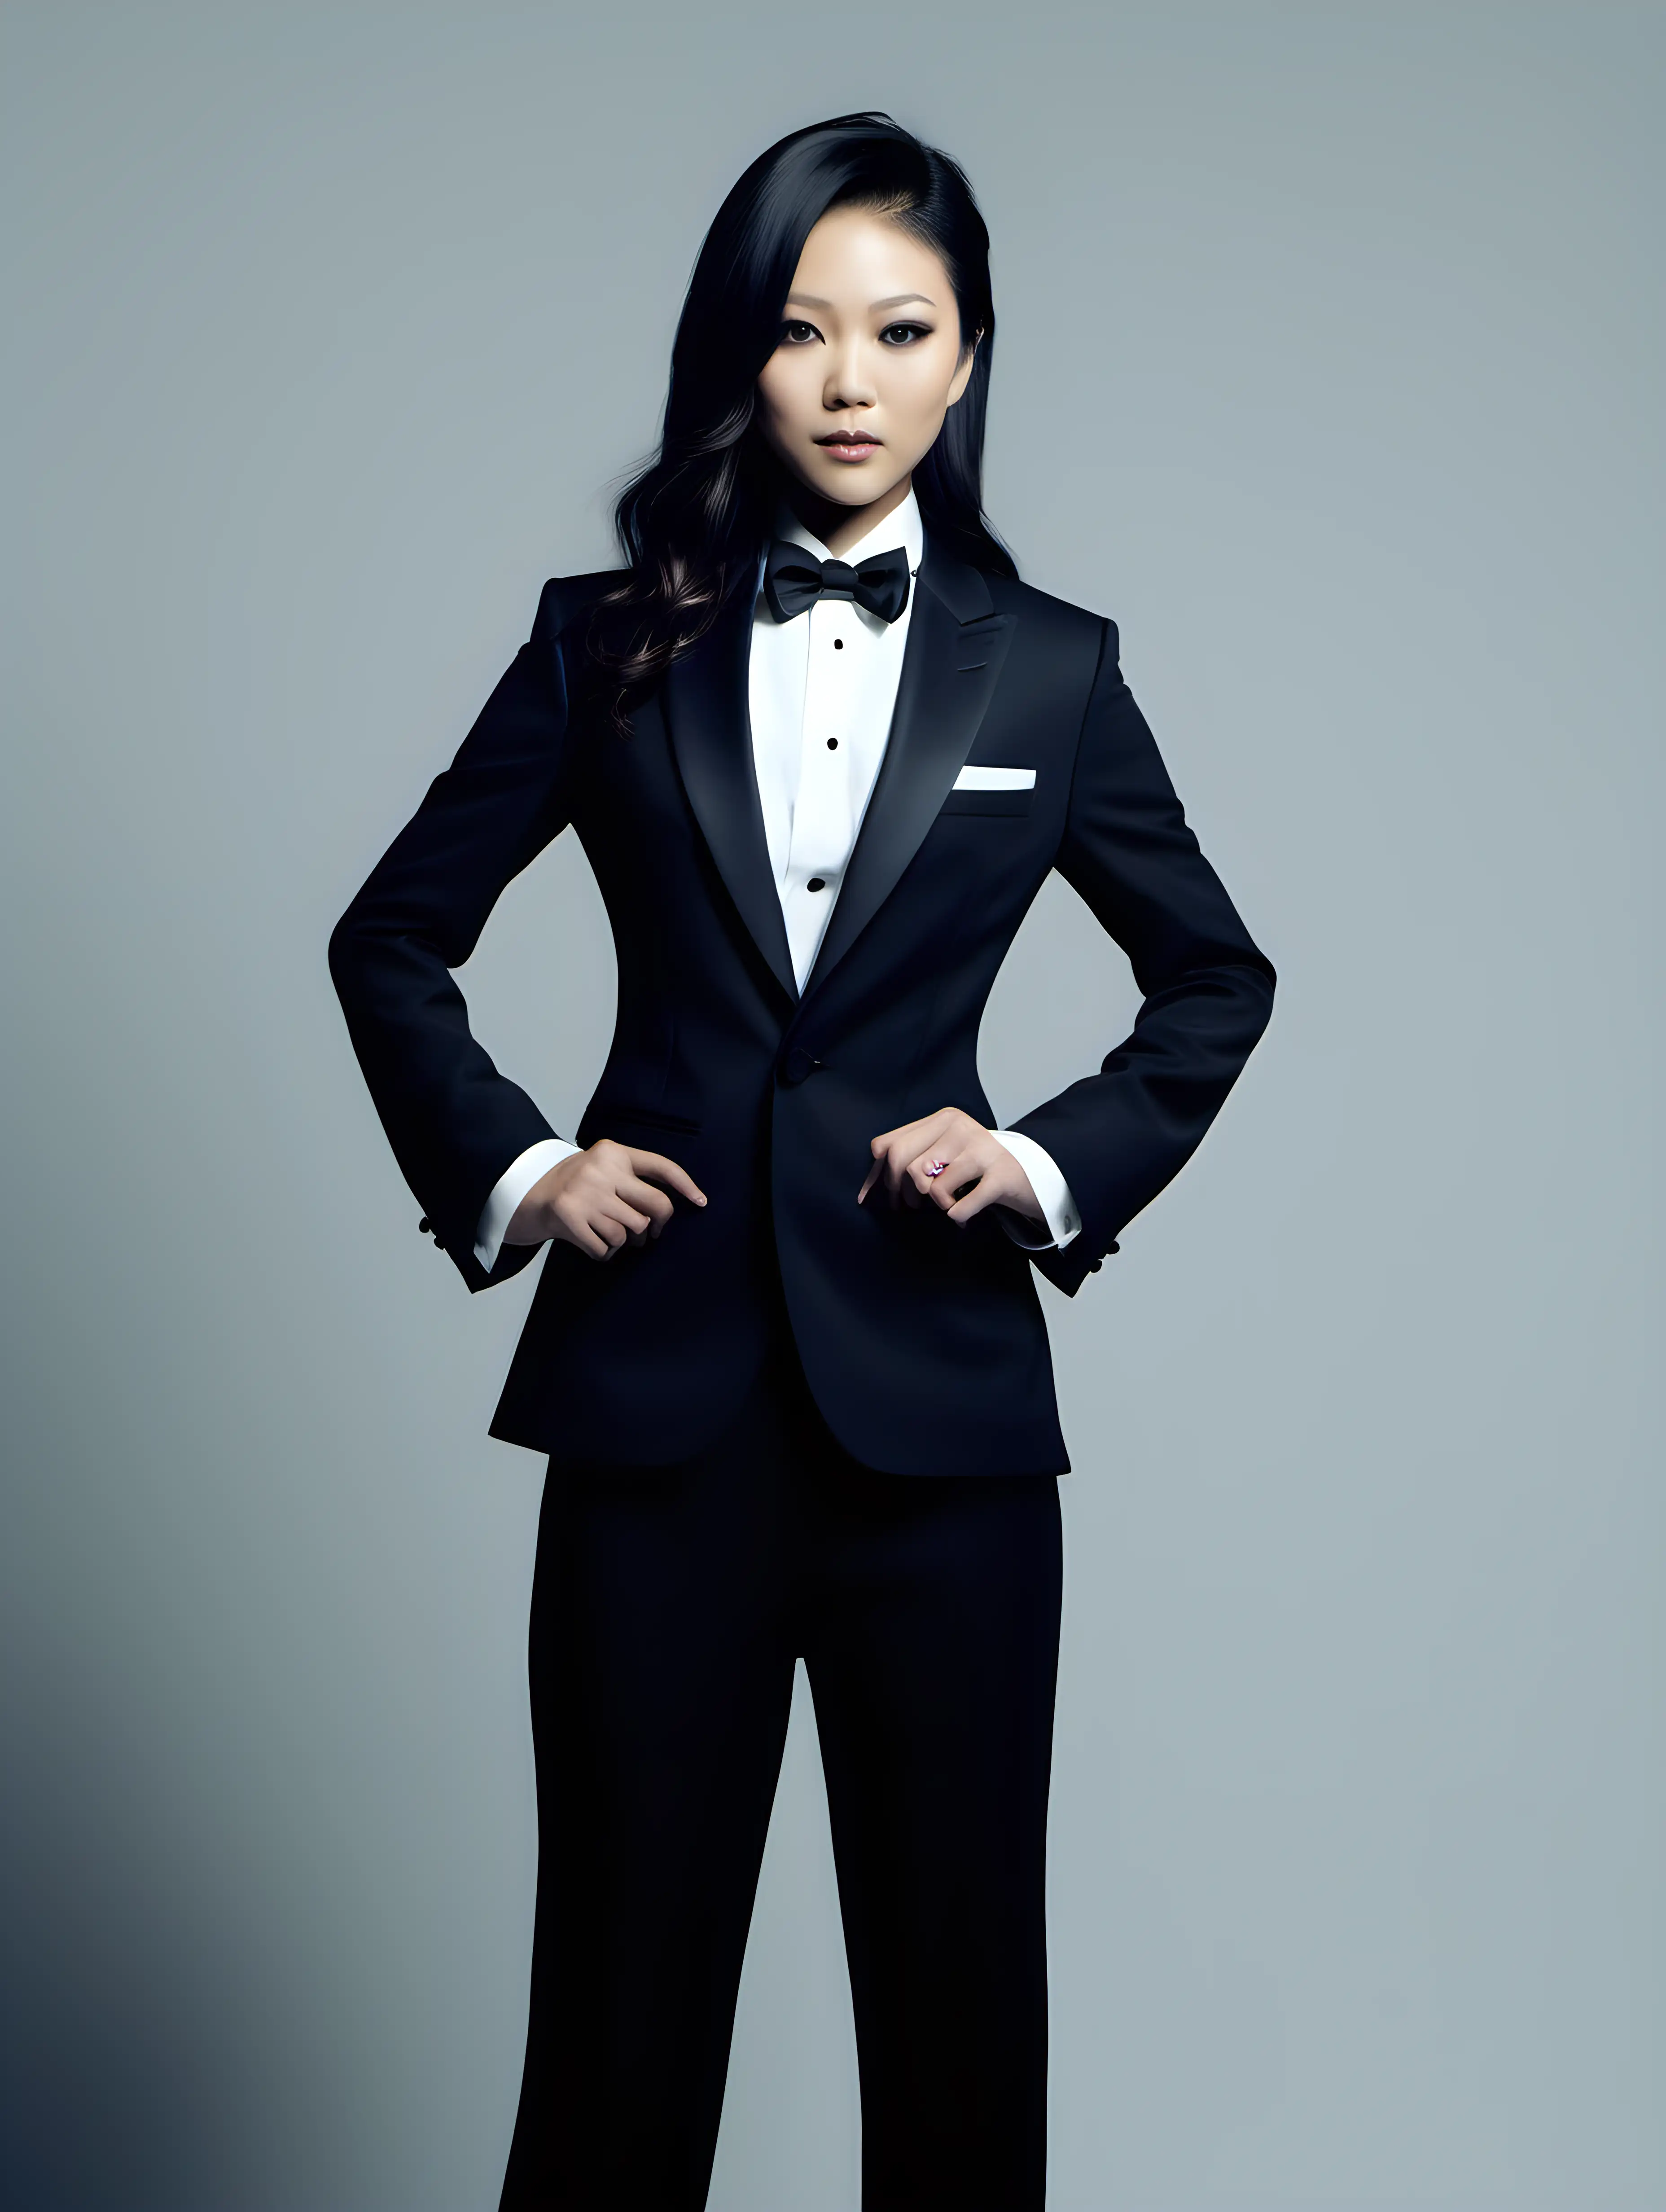 Stephanie-Hsu-in-Elegant-Tuxedo-Attire